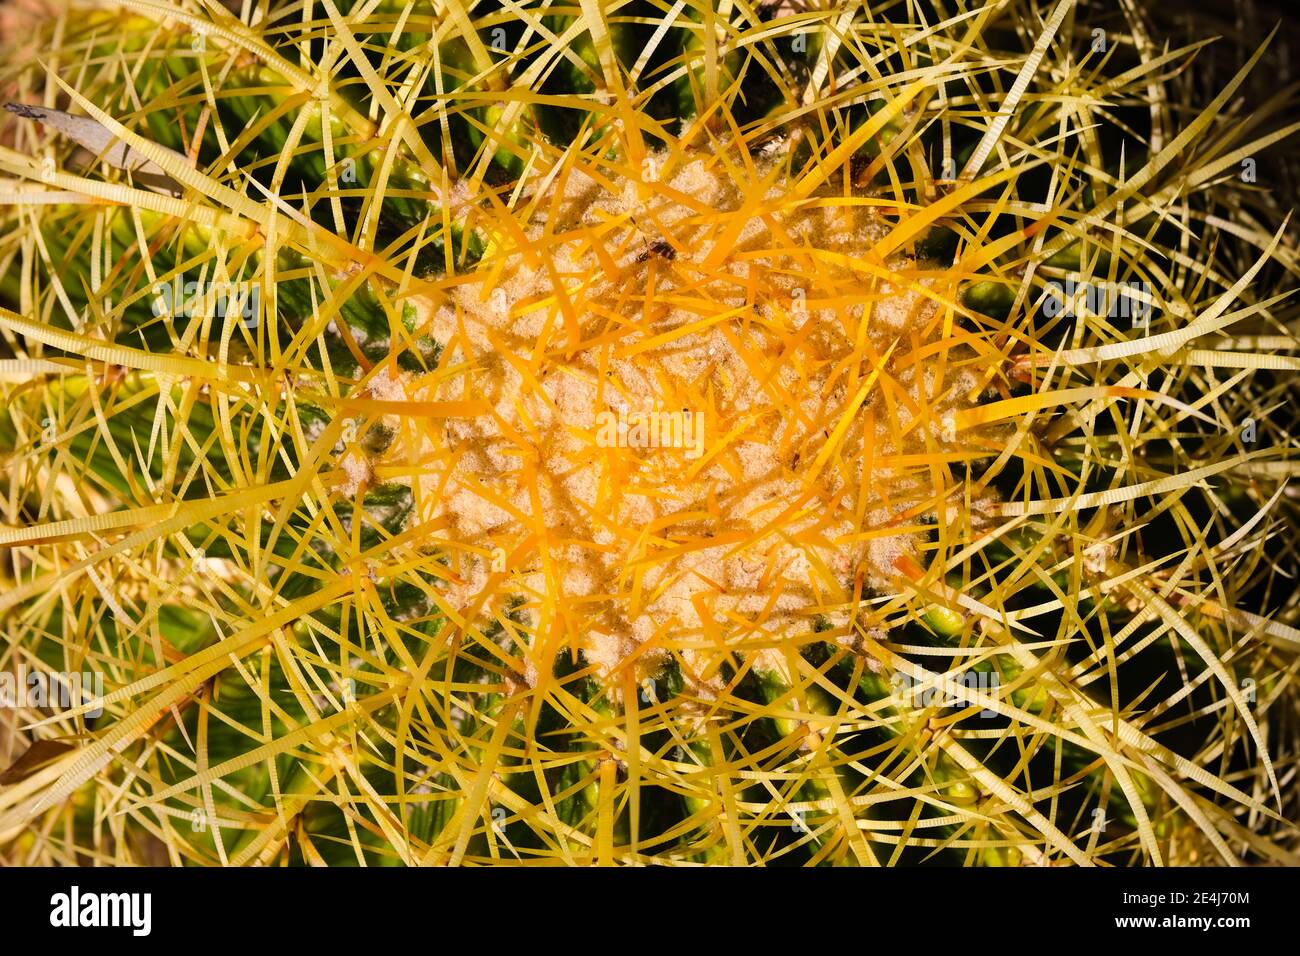 A Golden Ball cactus growing in the Botanic Gardens of Adelaide Australia Stock Photo